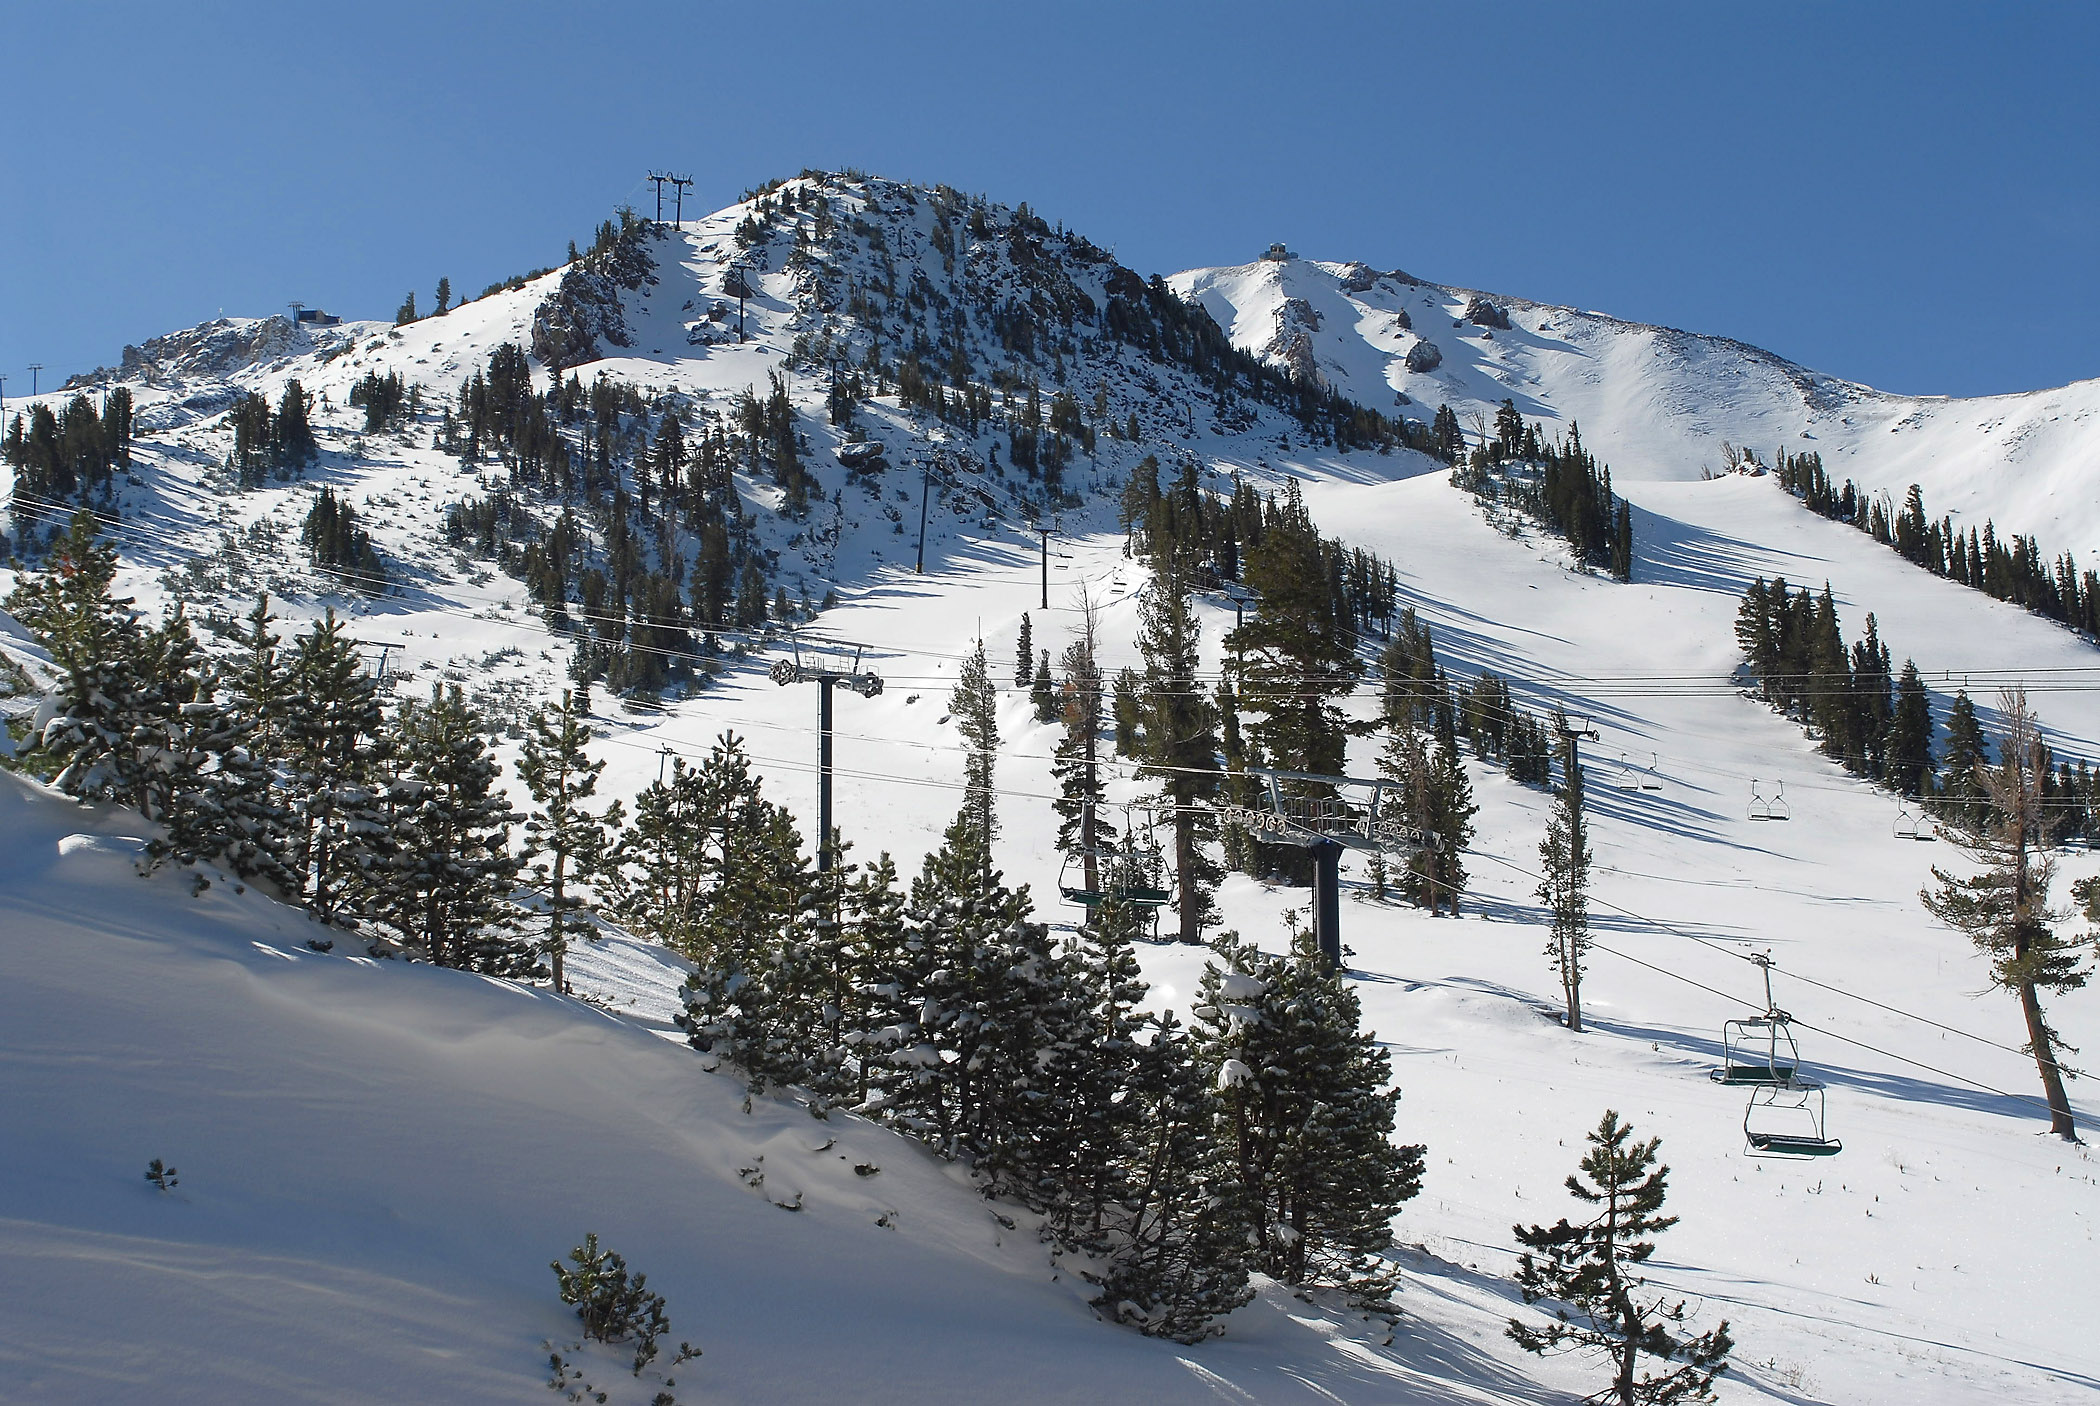 Mammoth Mountain Ski Area